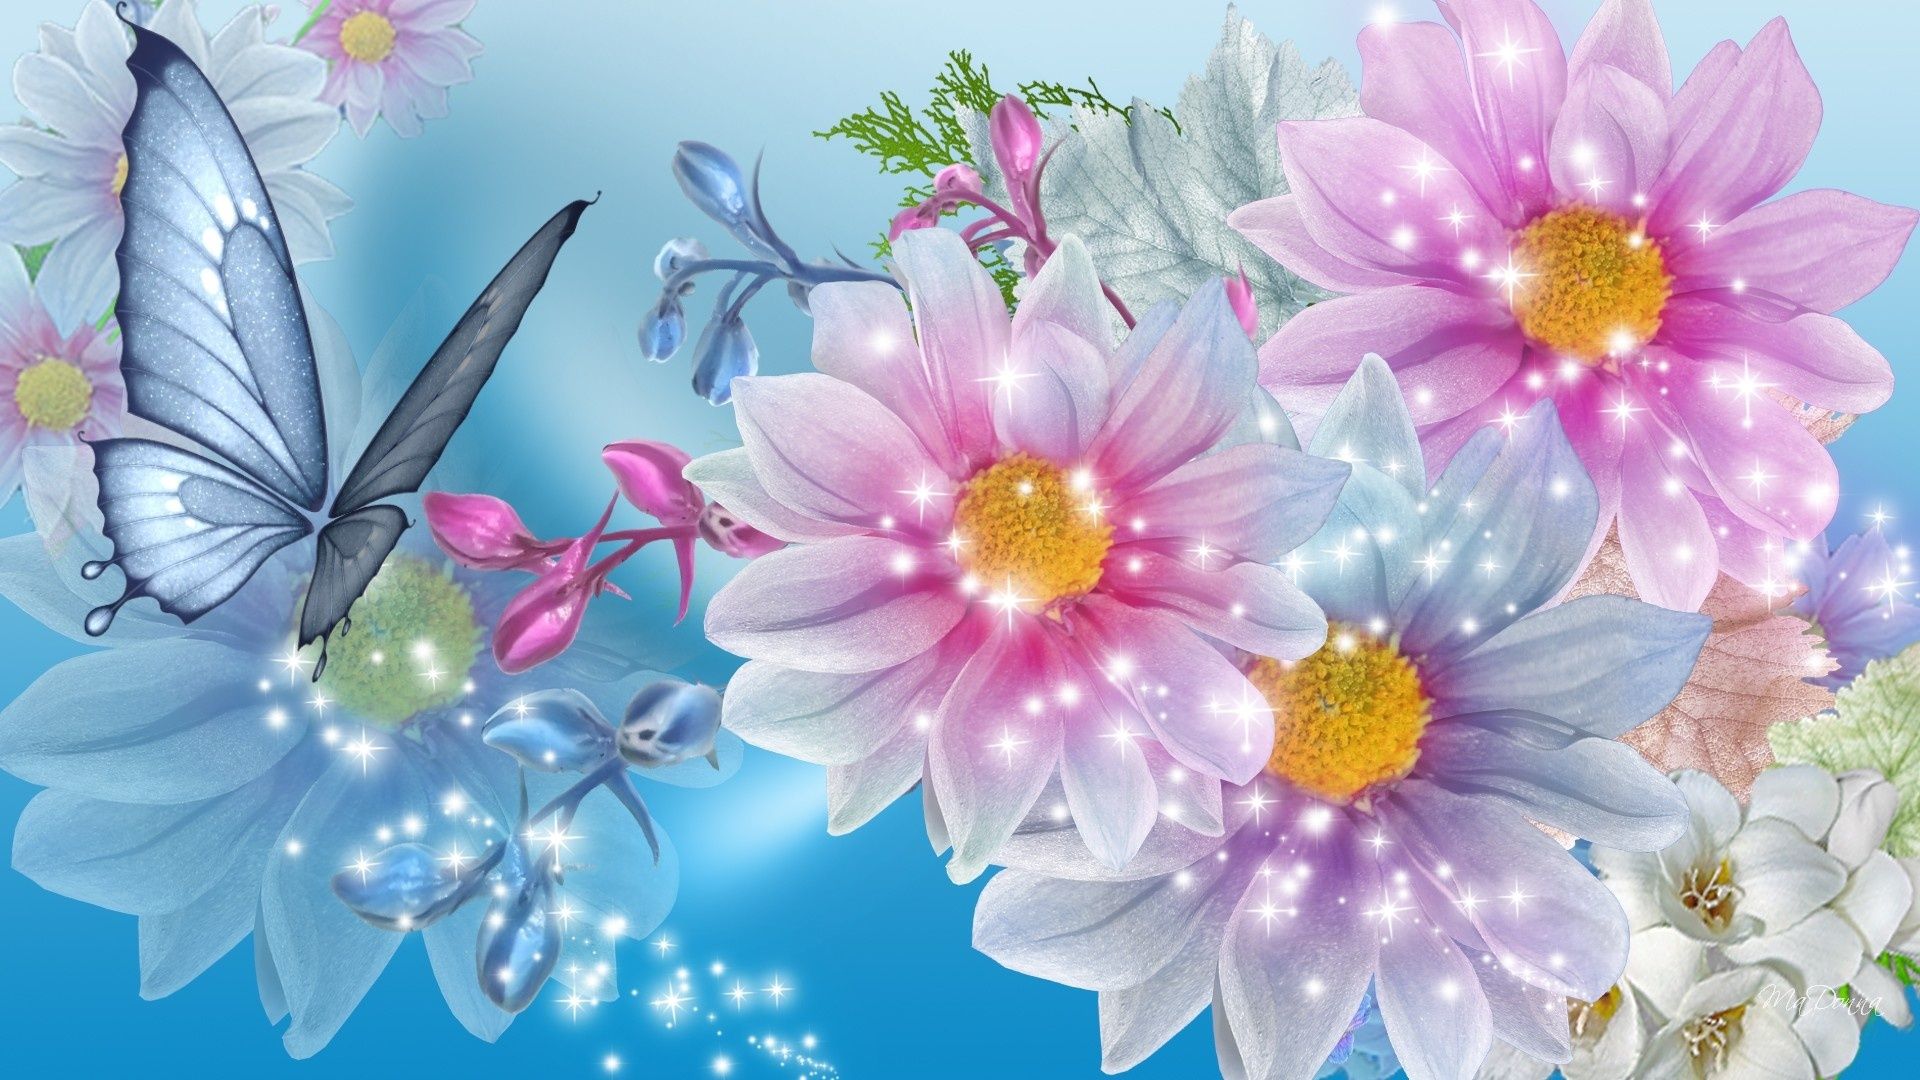 Online florist dubai. Flower wallpaper, Beautiful flowers